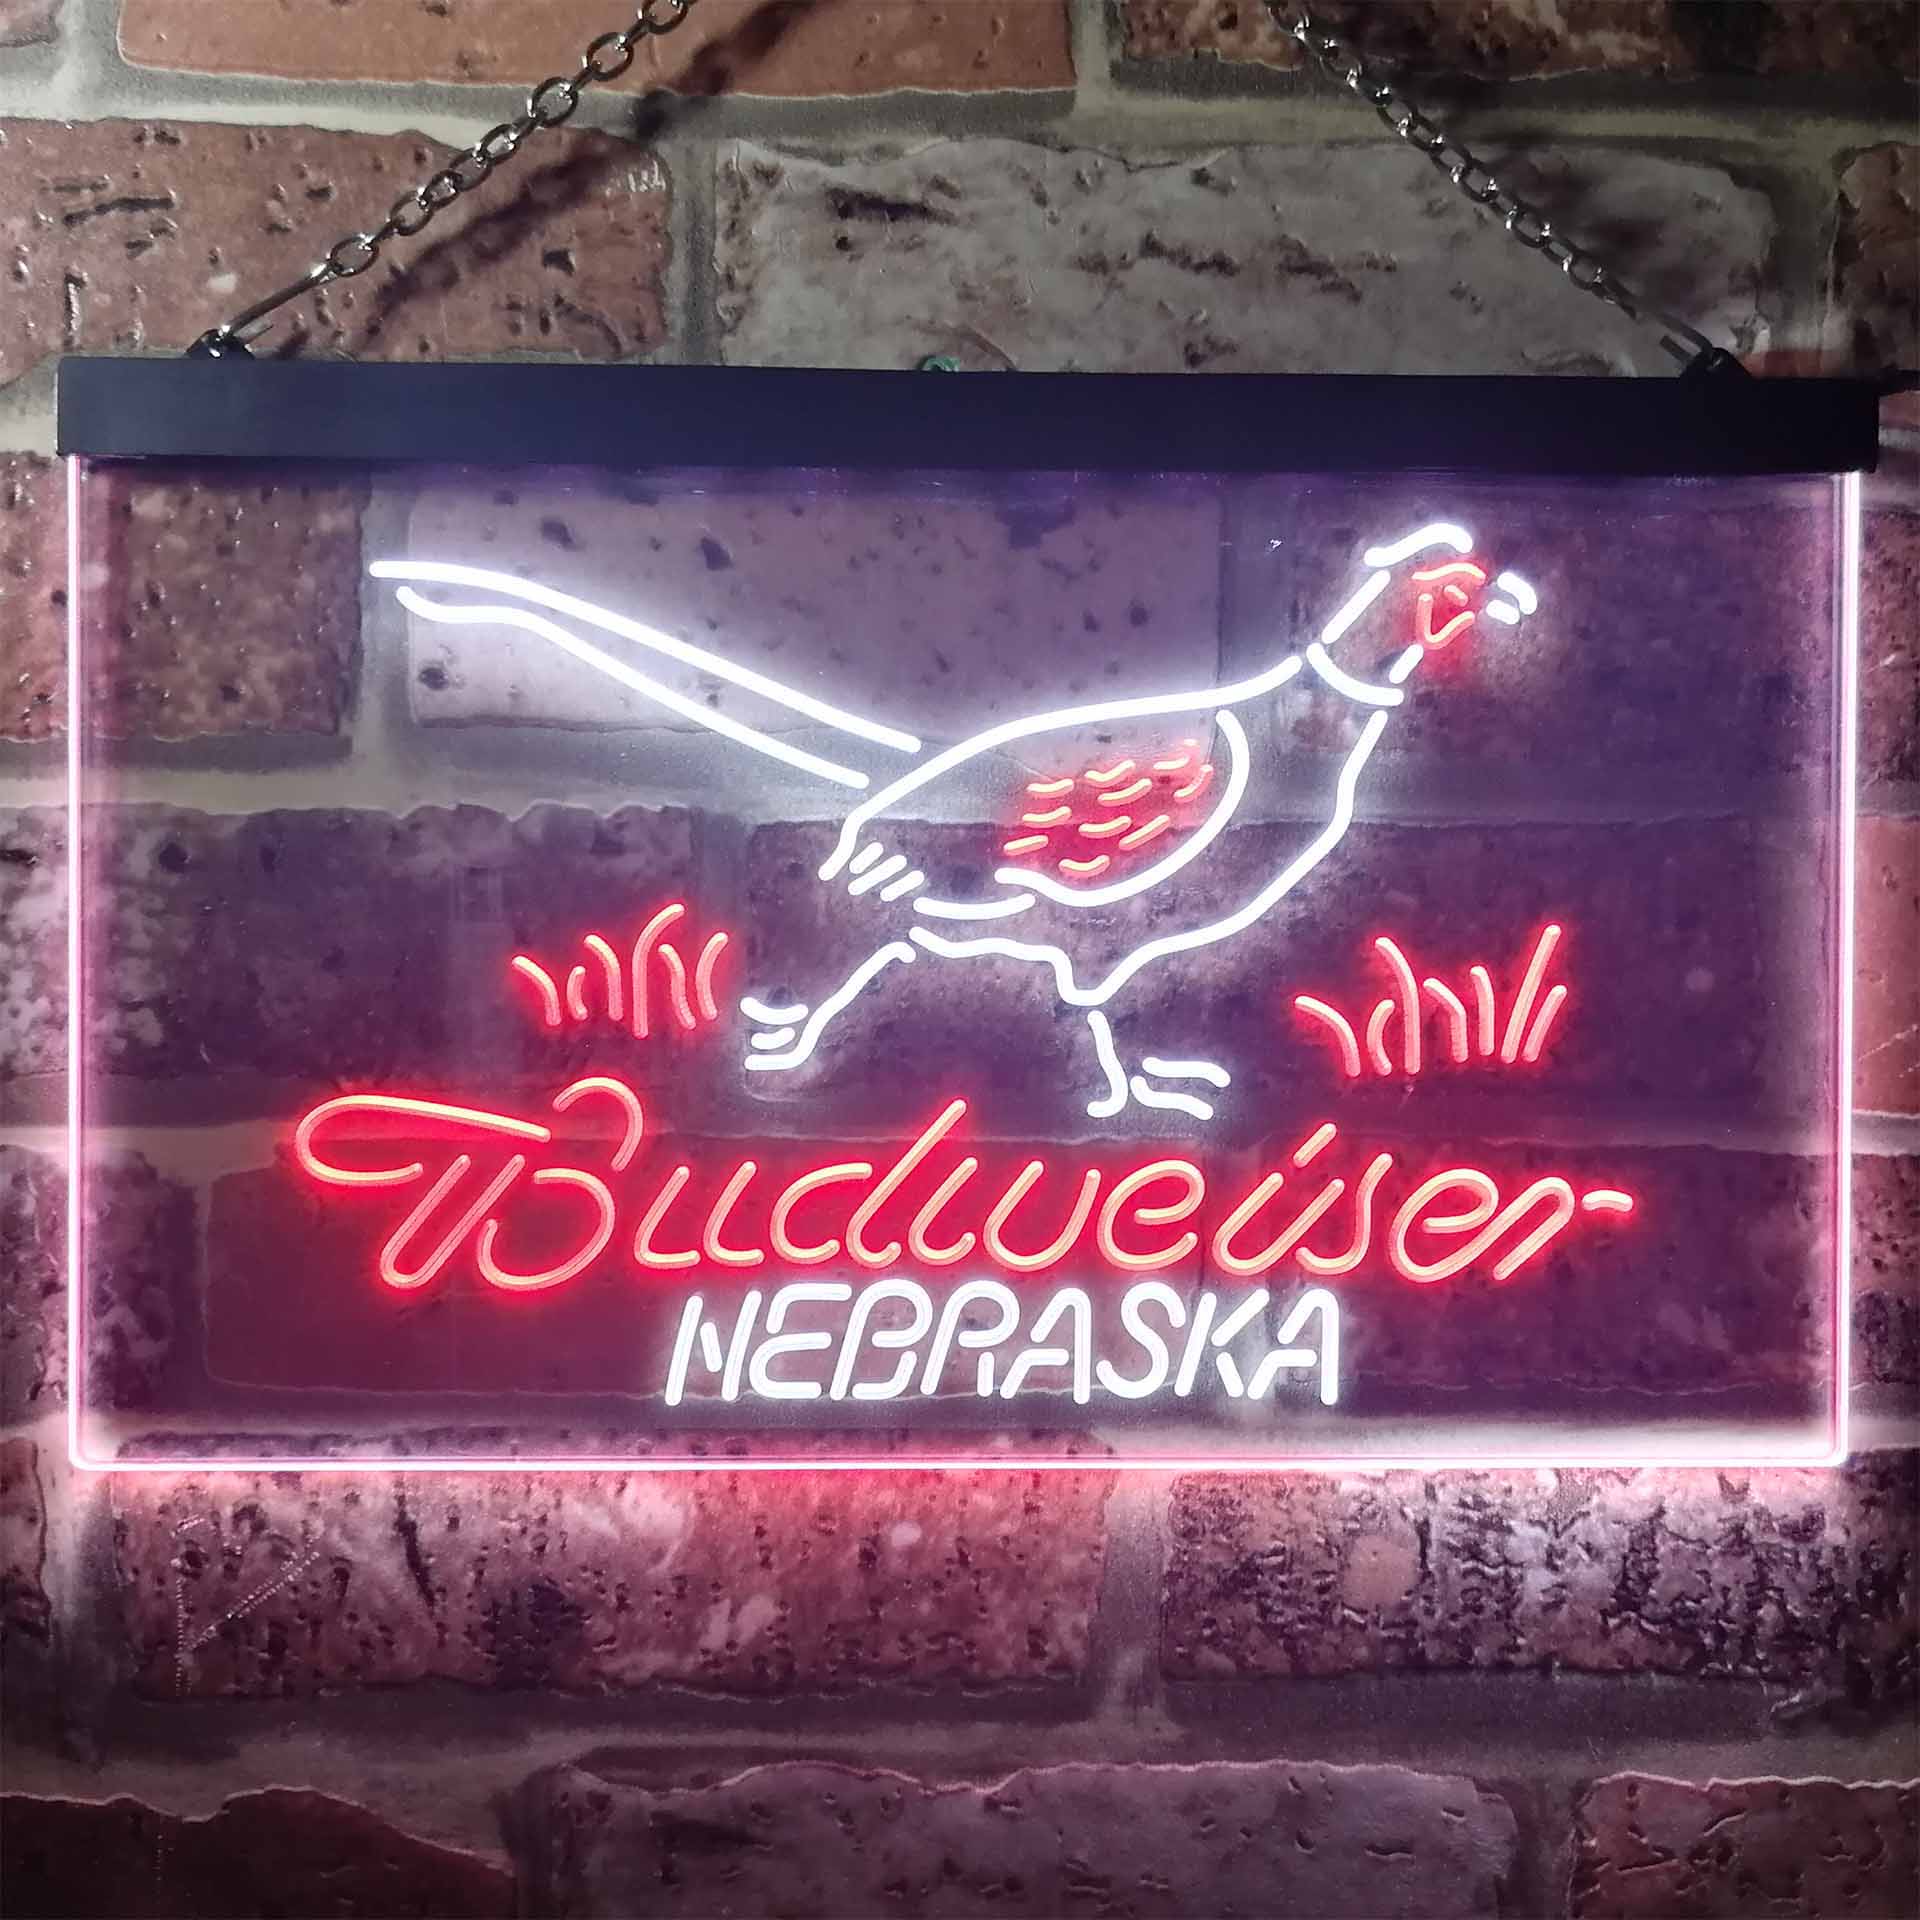 Nebraska Pheasant Hunter Budweiser's Dual Color LED Neon Sign ProLedSign